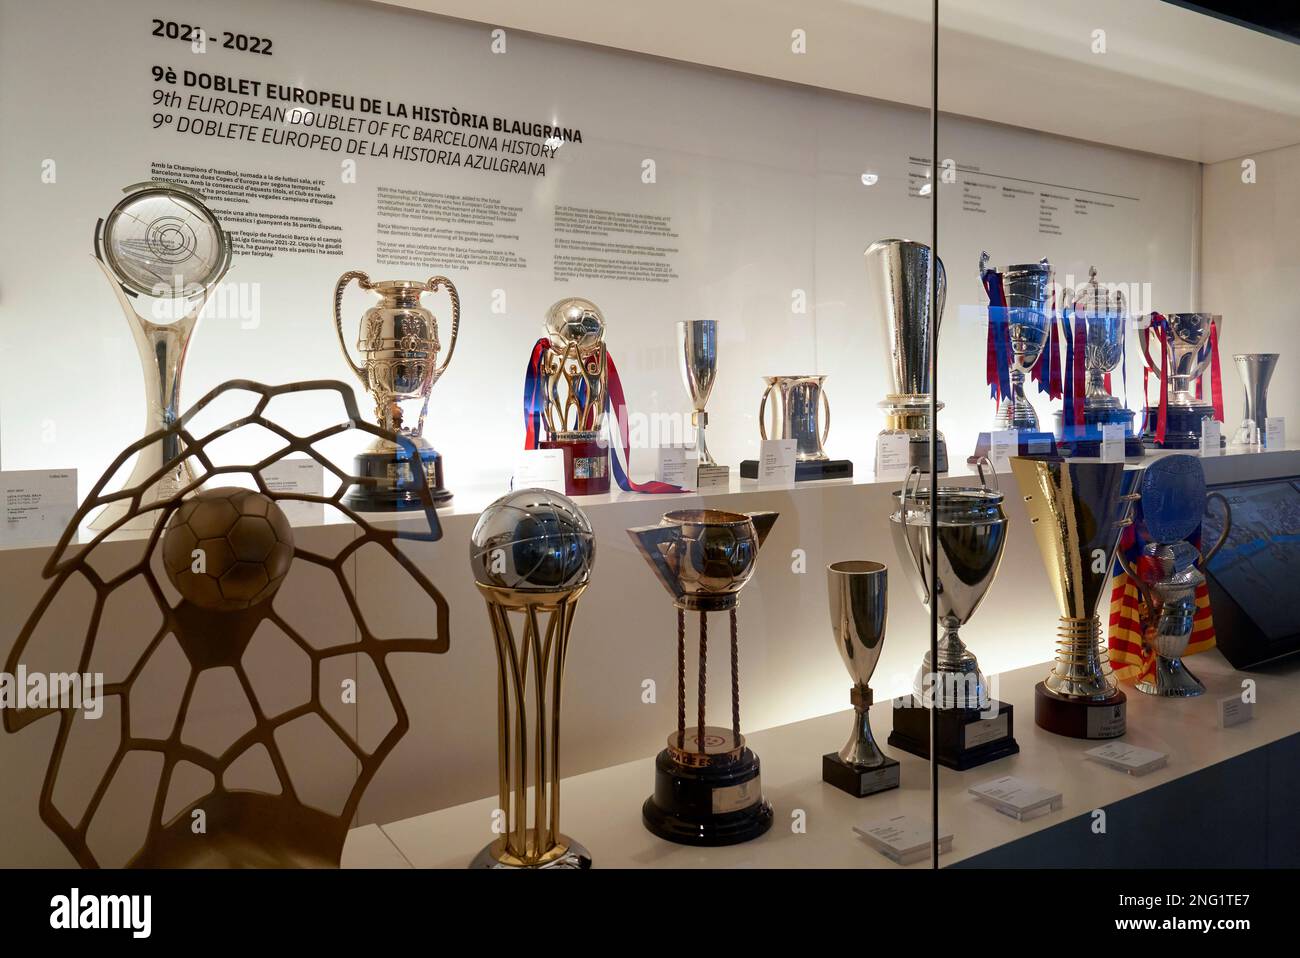 FC Barcelona Wins the Spanish League Championship Editorial Photo - Image  of championship, football: 19613306